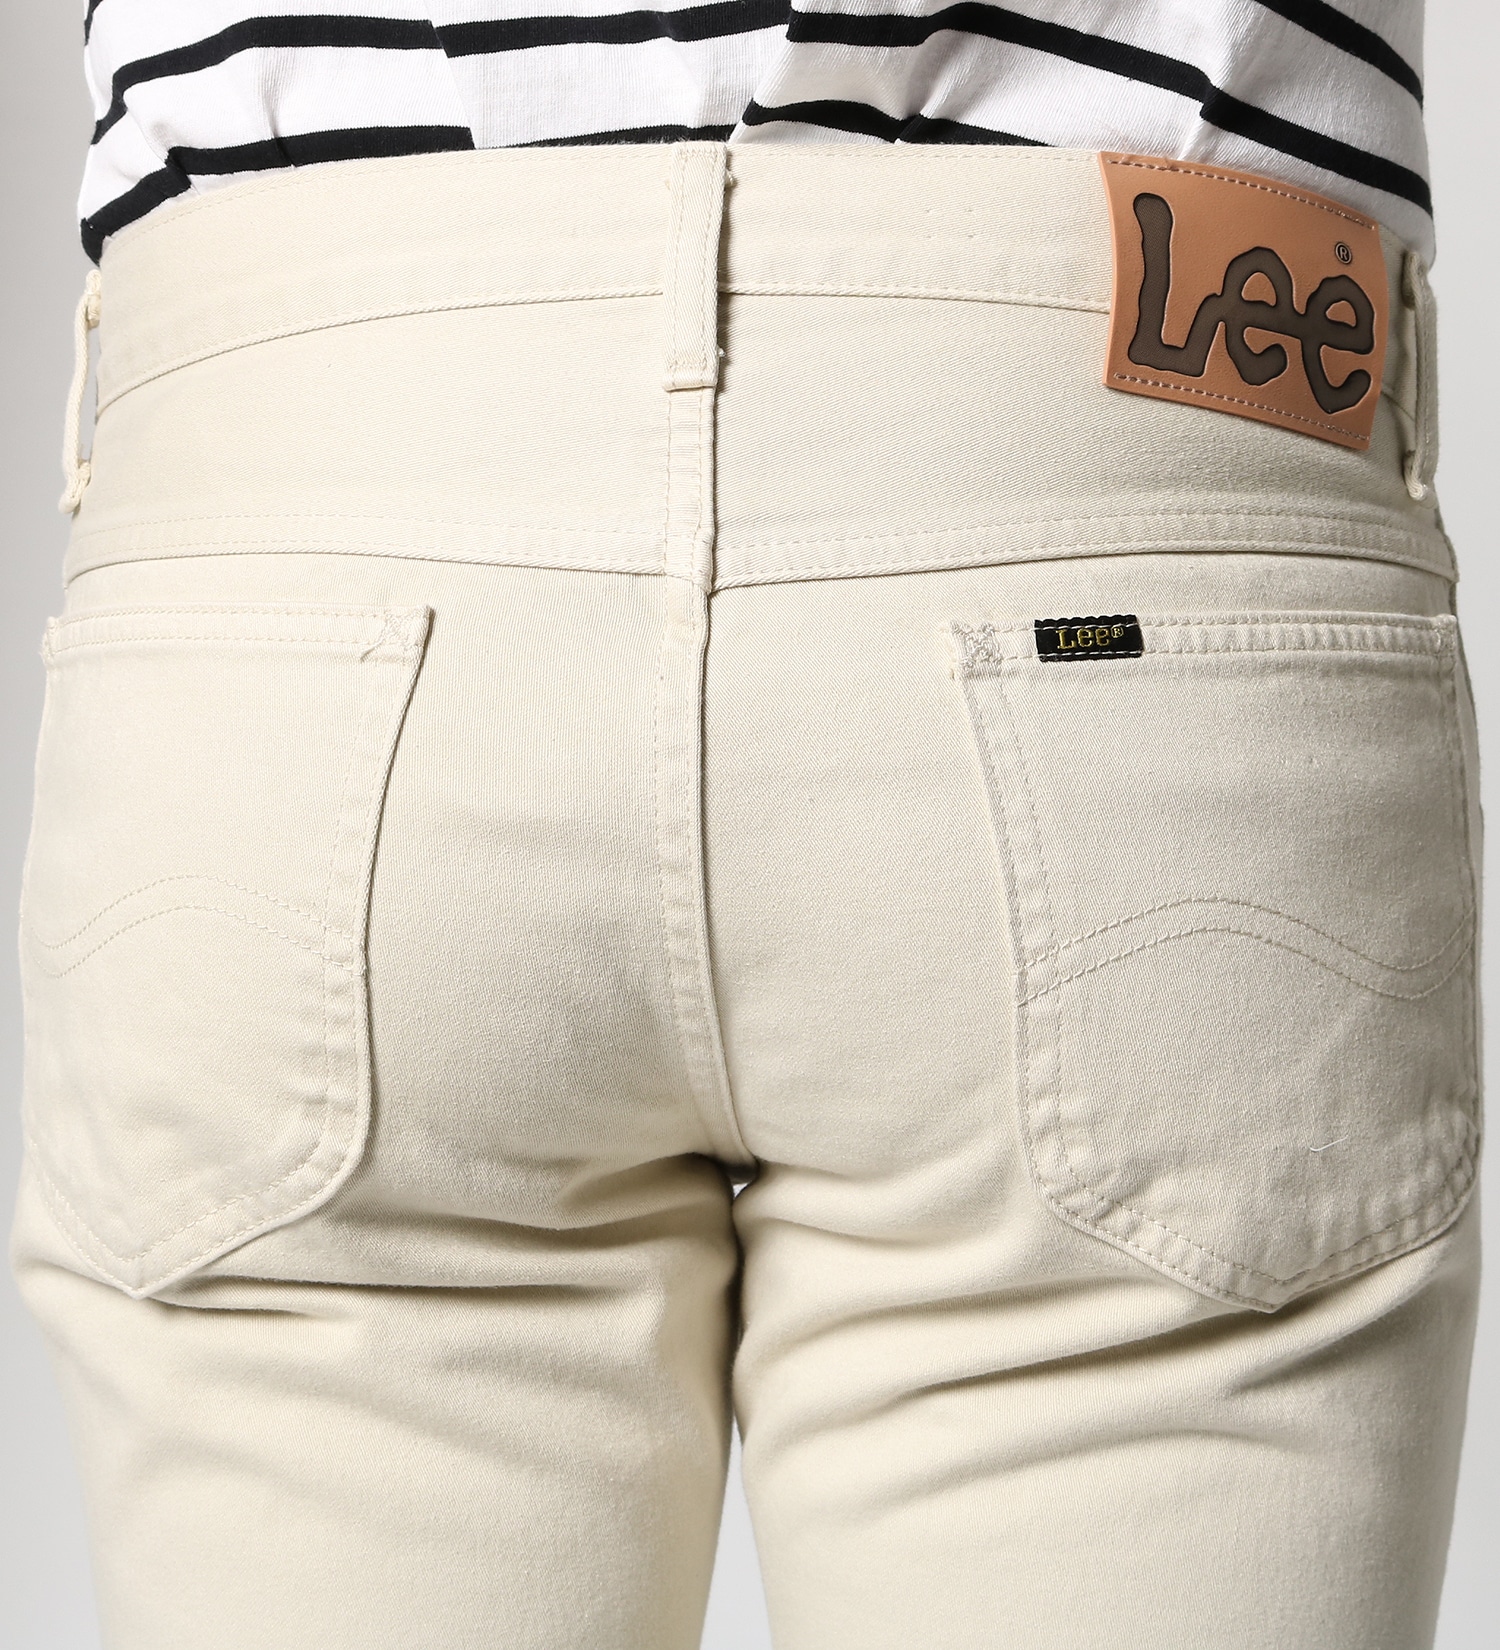 Lee(リー)のAMERICAN STANDARD 205 タイトストレート  サテン|パンツ/デニムパンツ/メンズ|サンドベージュ